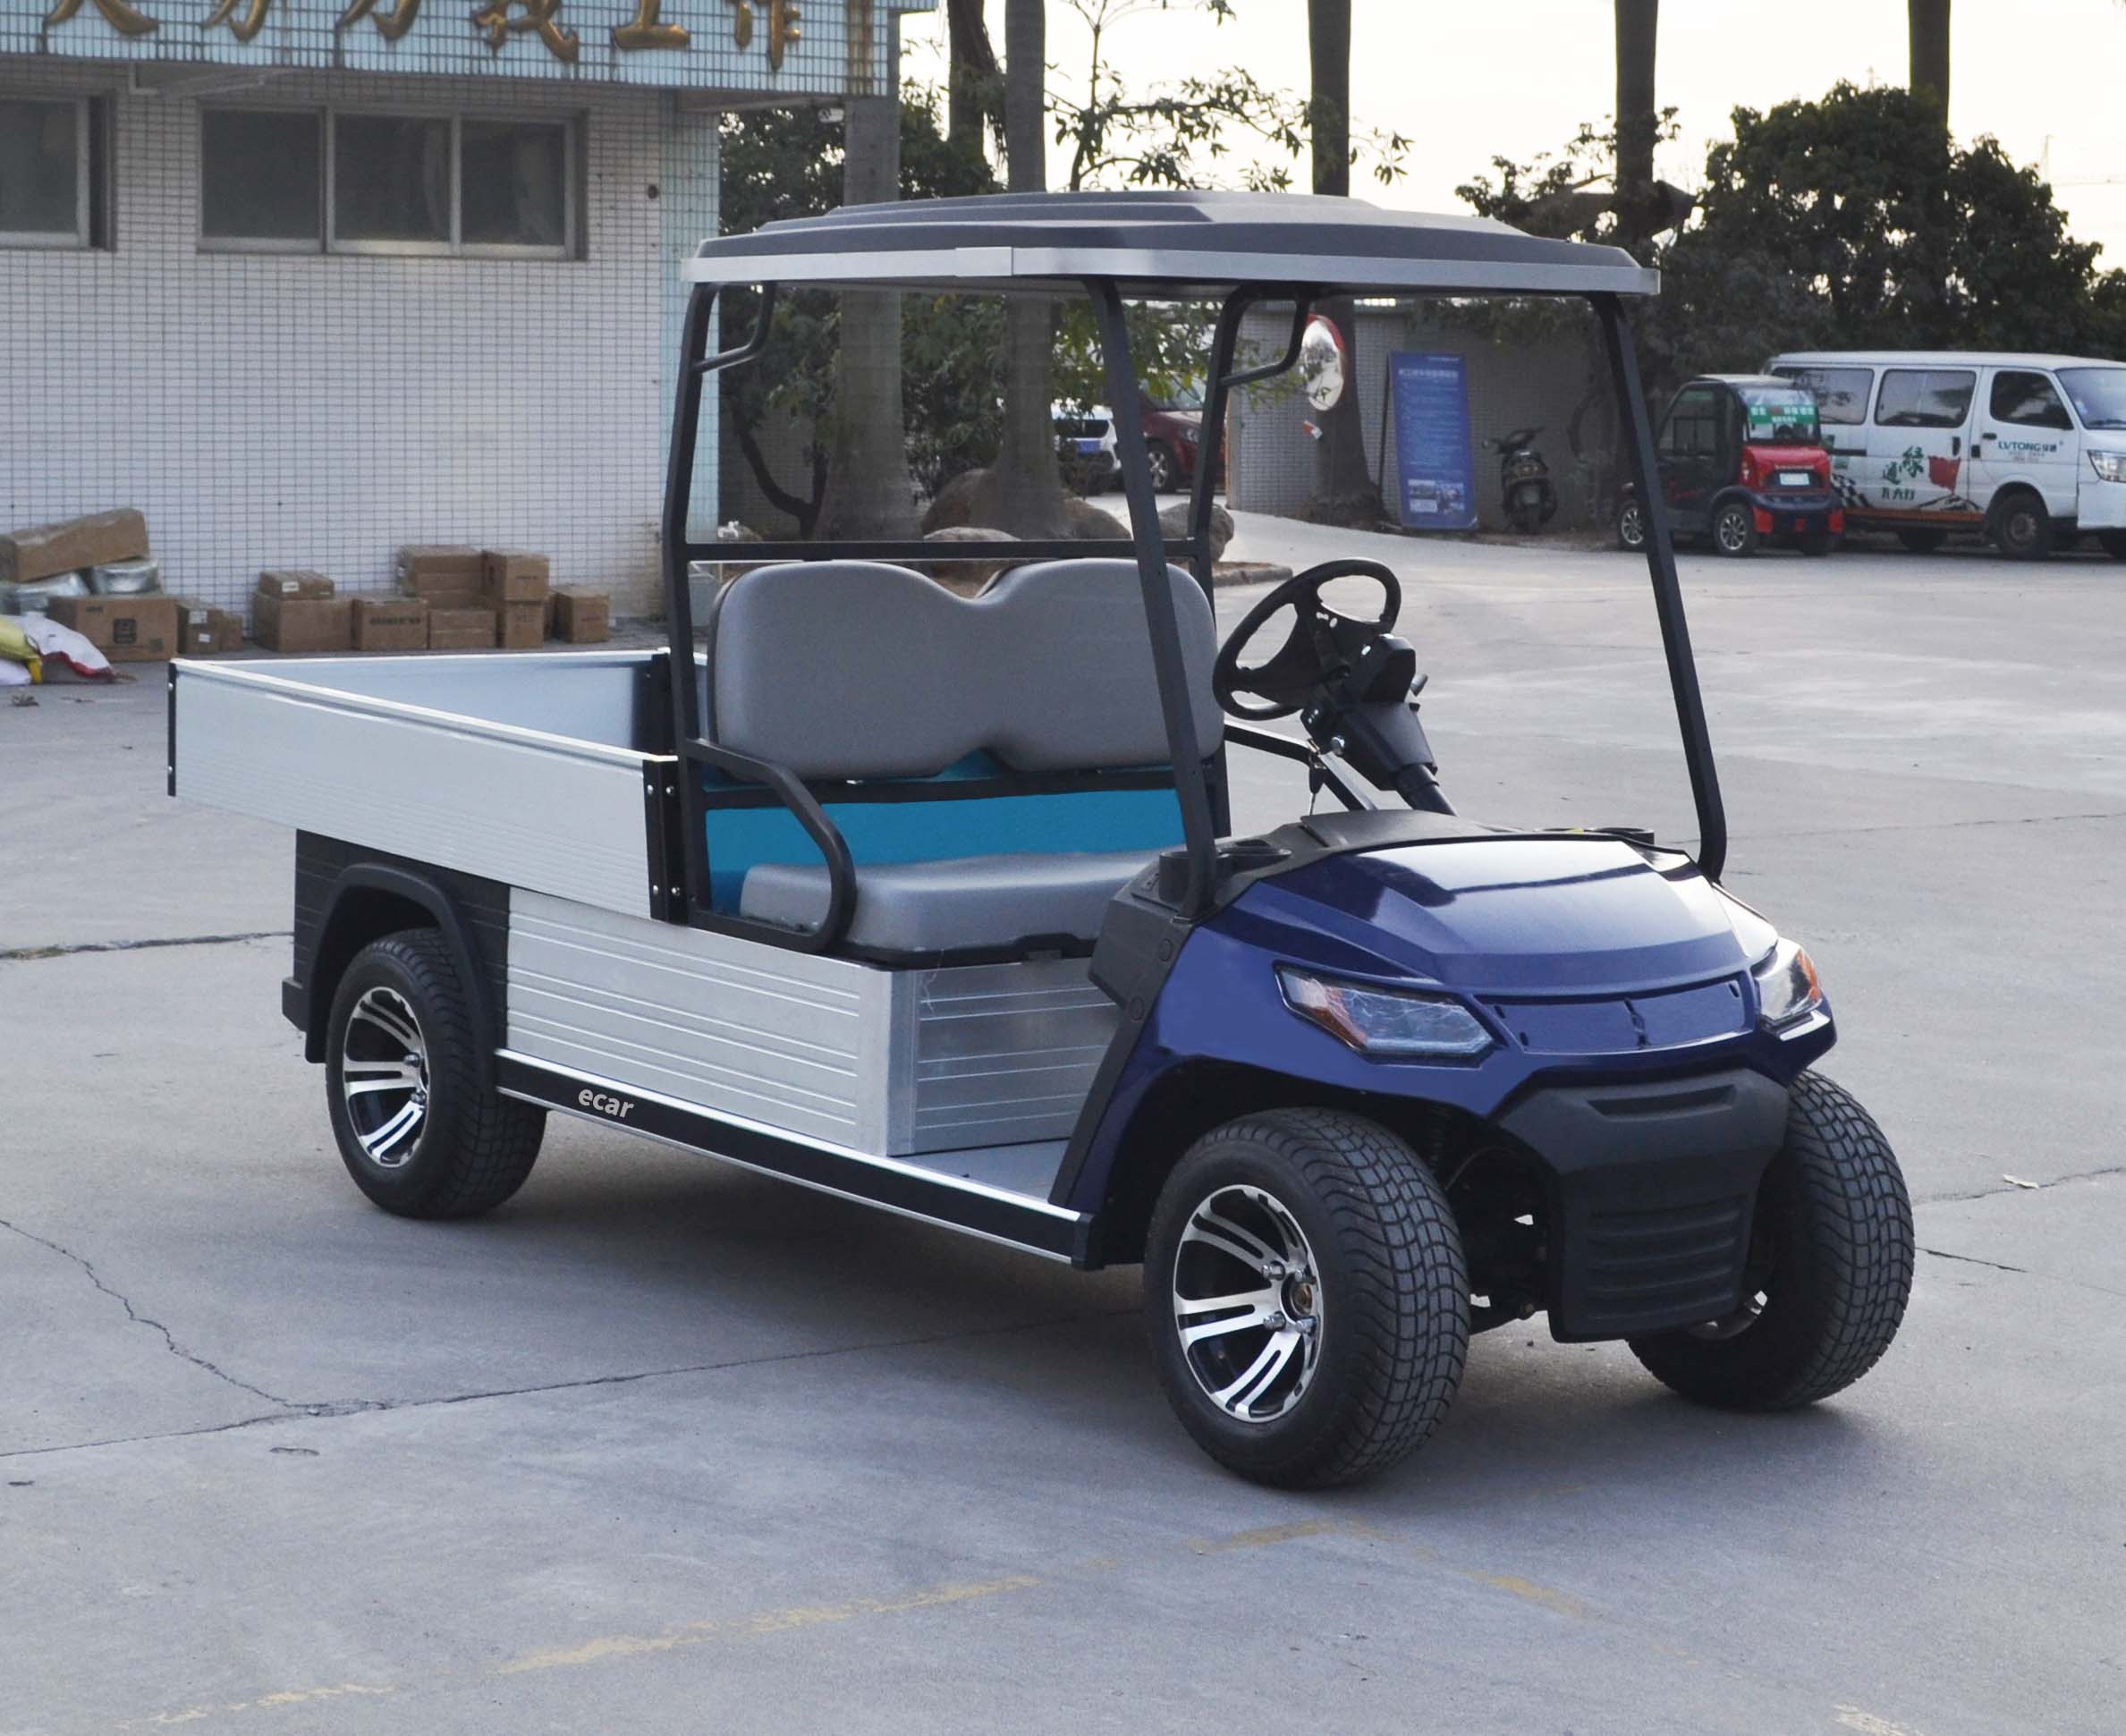 ECAR LT-A827.H8 - 2 Seater Cart Electric Golf